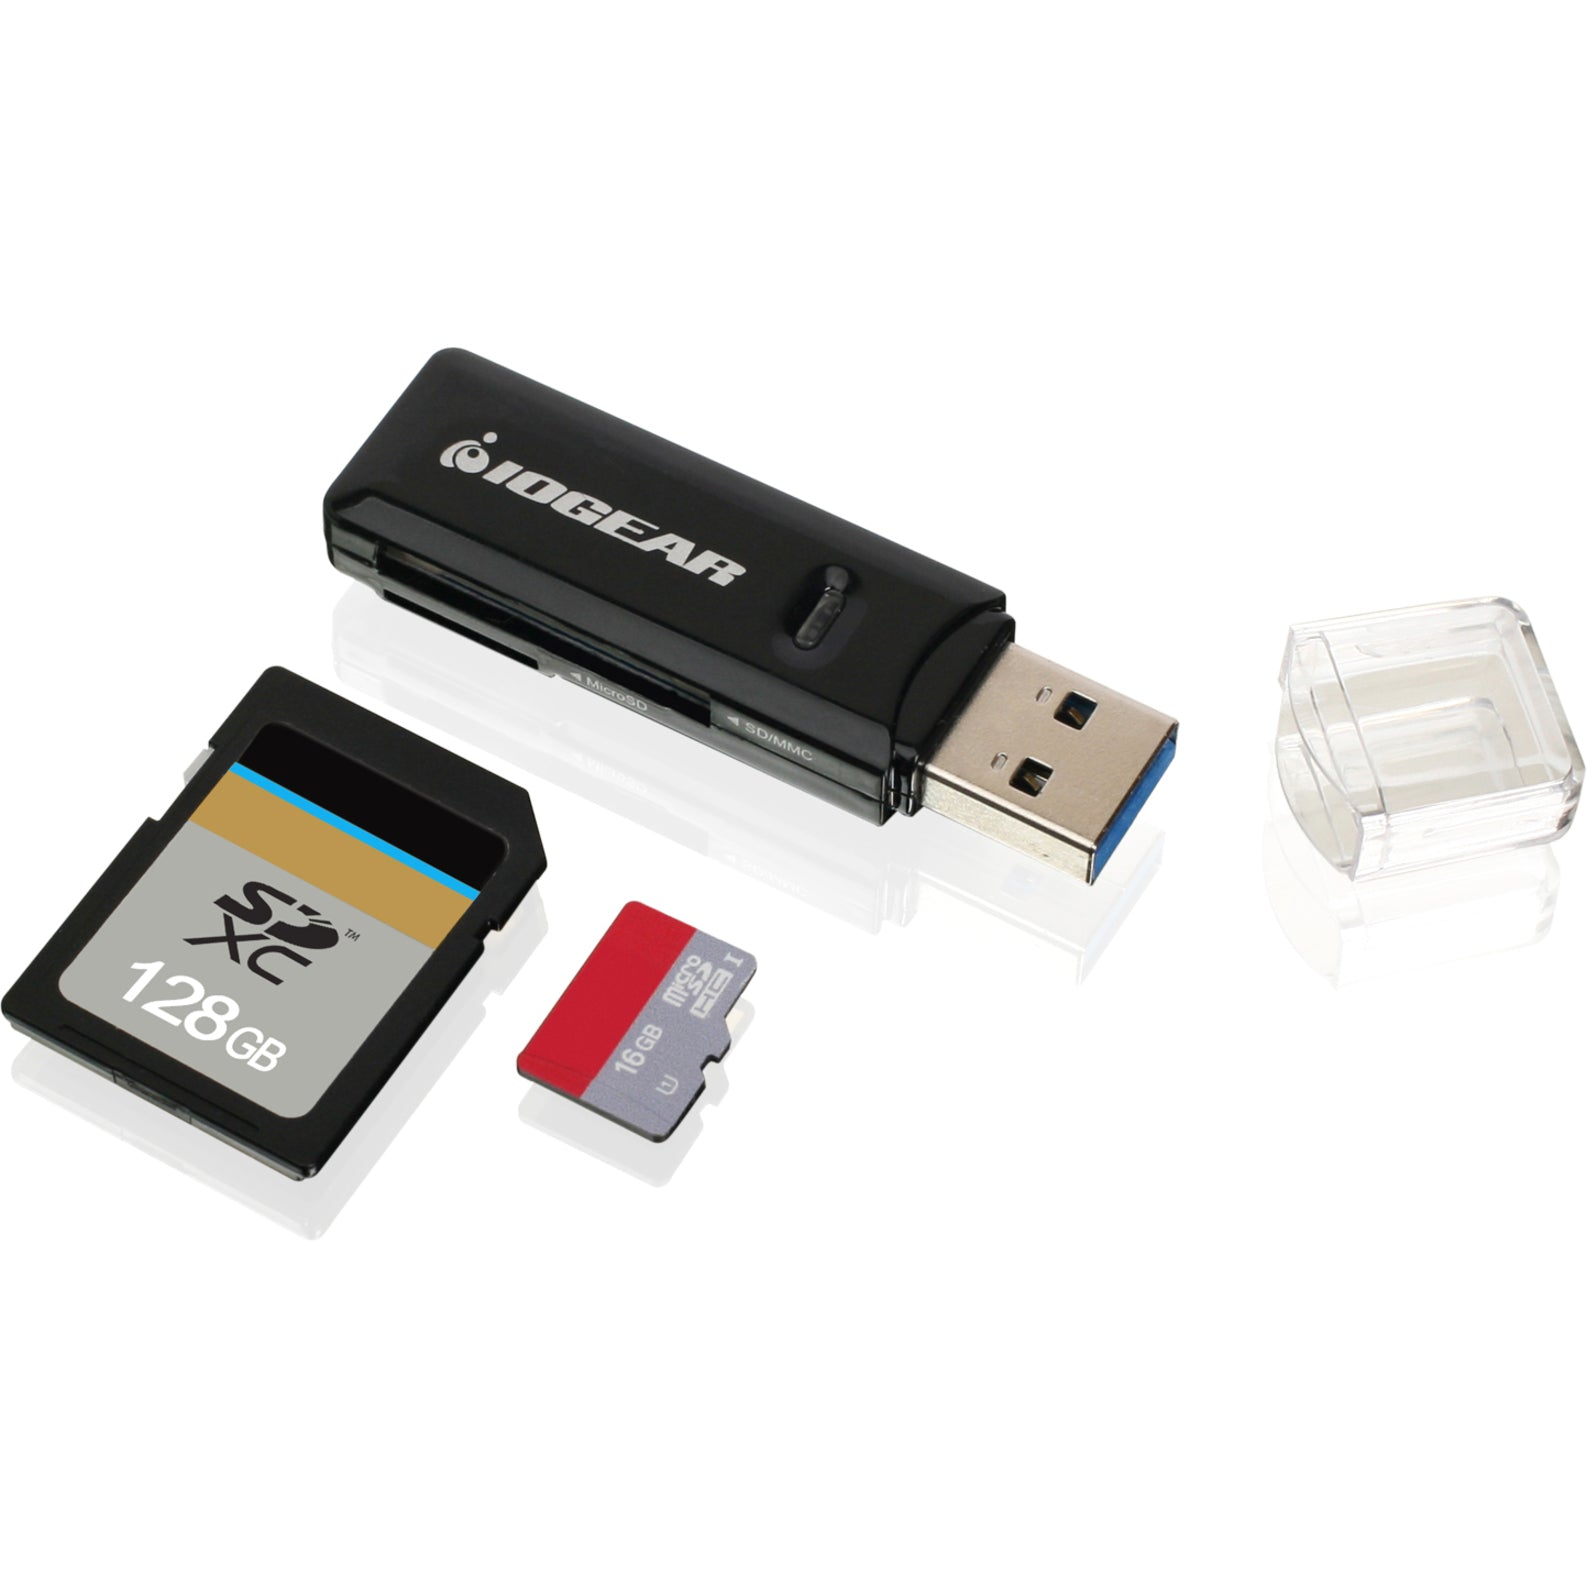 IOGEAR GFR305SD Compact USB 3.0 SDXC/MicroSDXC Card Reader/Writer, High-Speed Data Transfer and Easy File Management